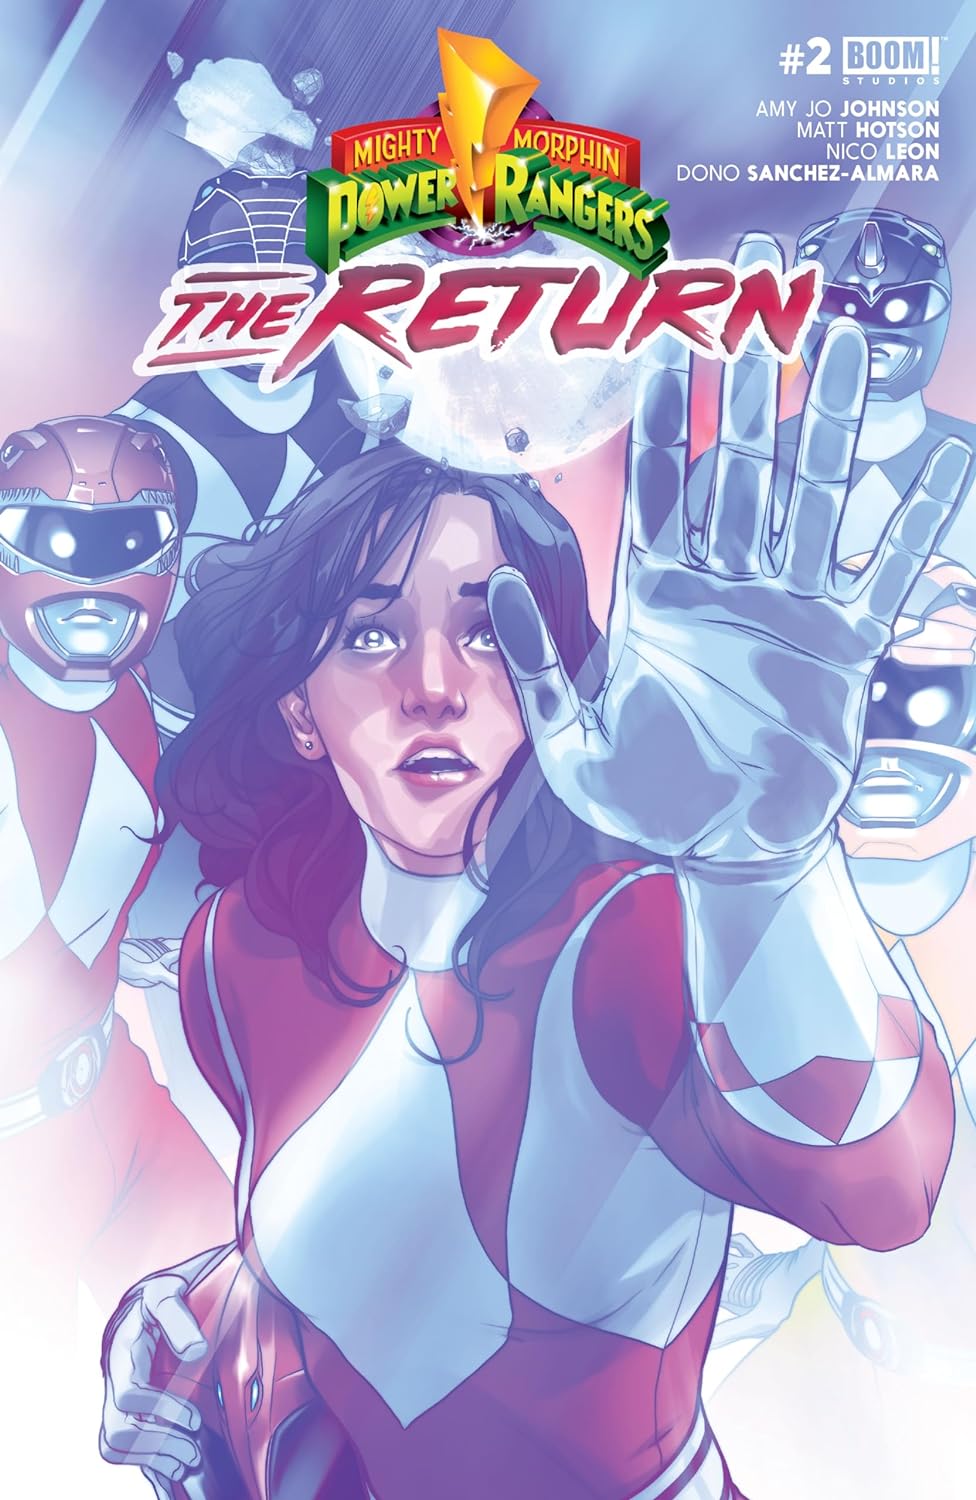 Mighty Morphin Power Rangers: The Return #2 cover art